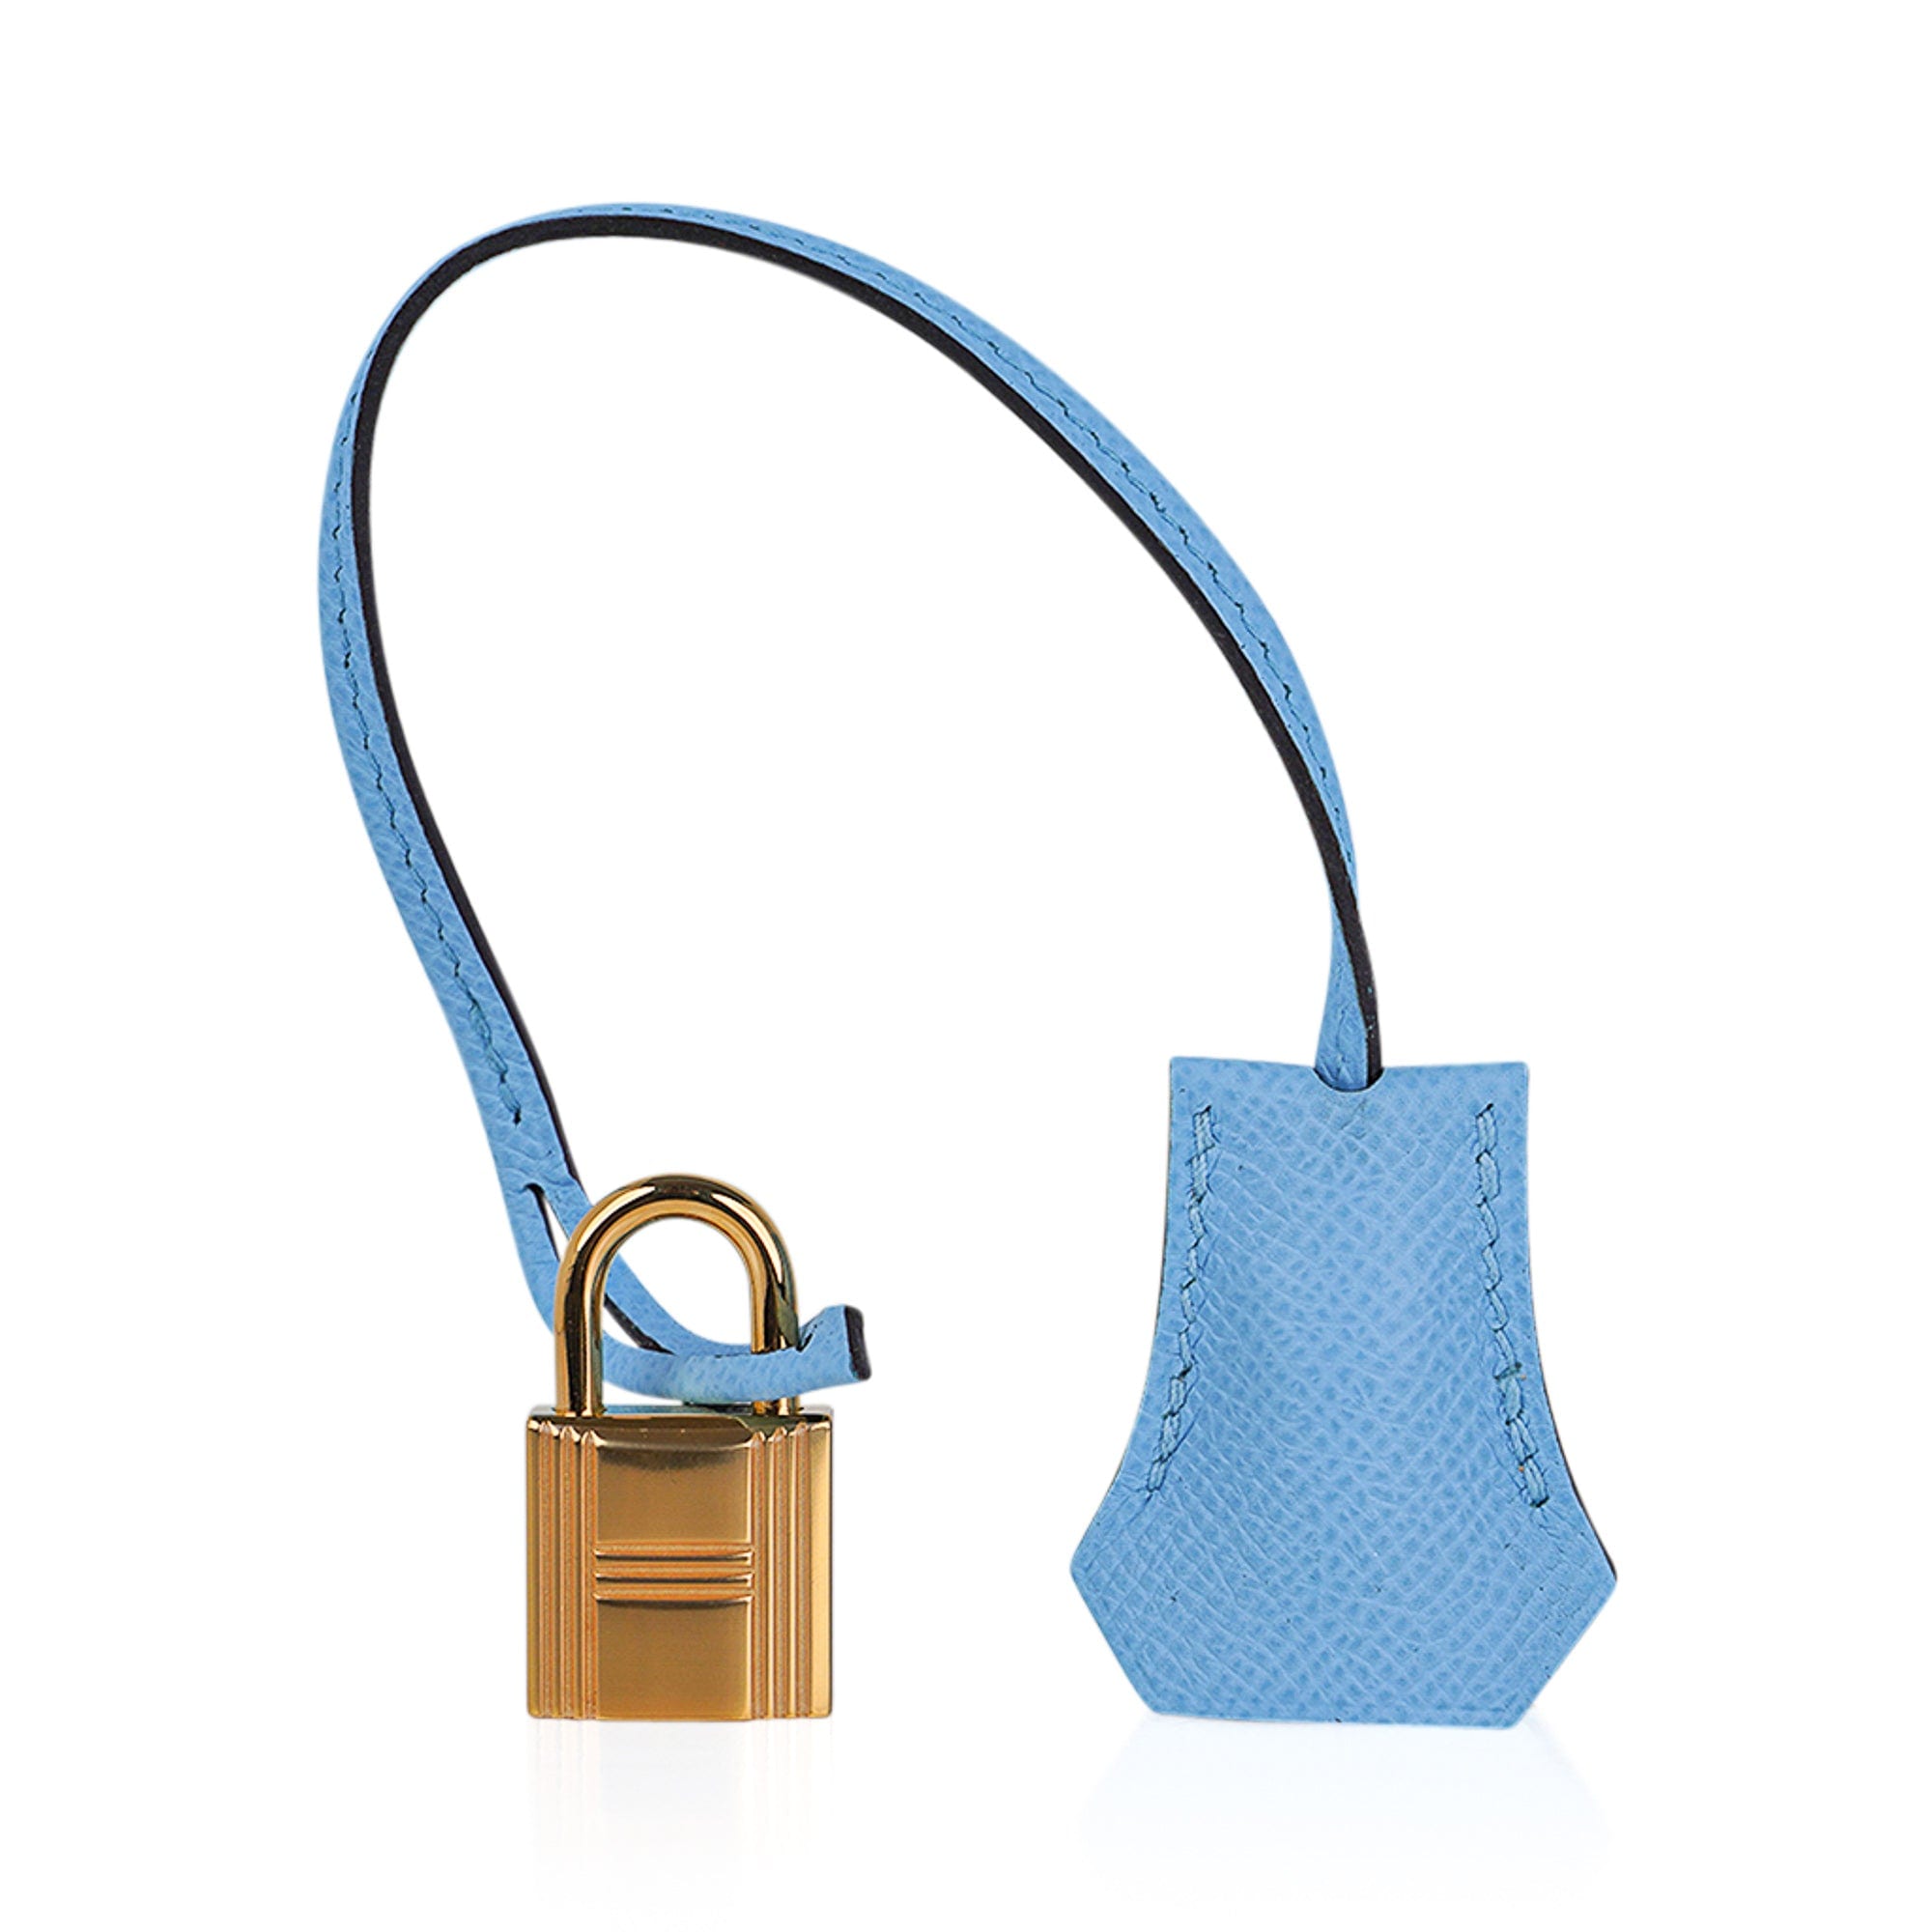 Hermes Birkin 30 Blue Atoll Tiffany Blue Epsom Leather Gold